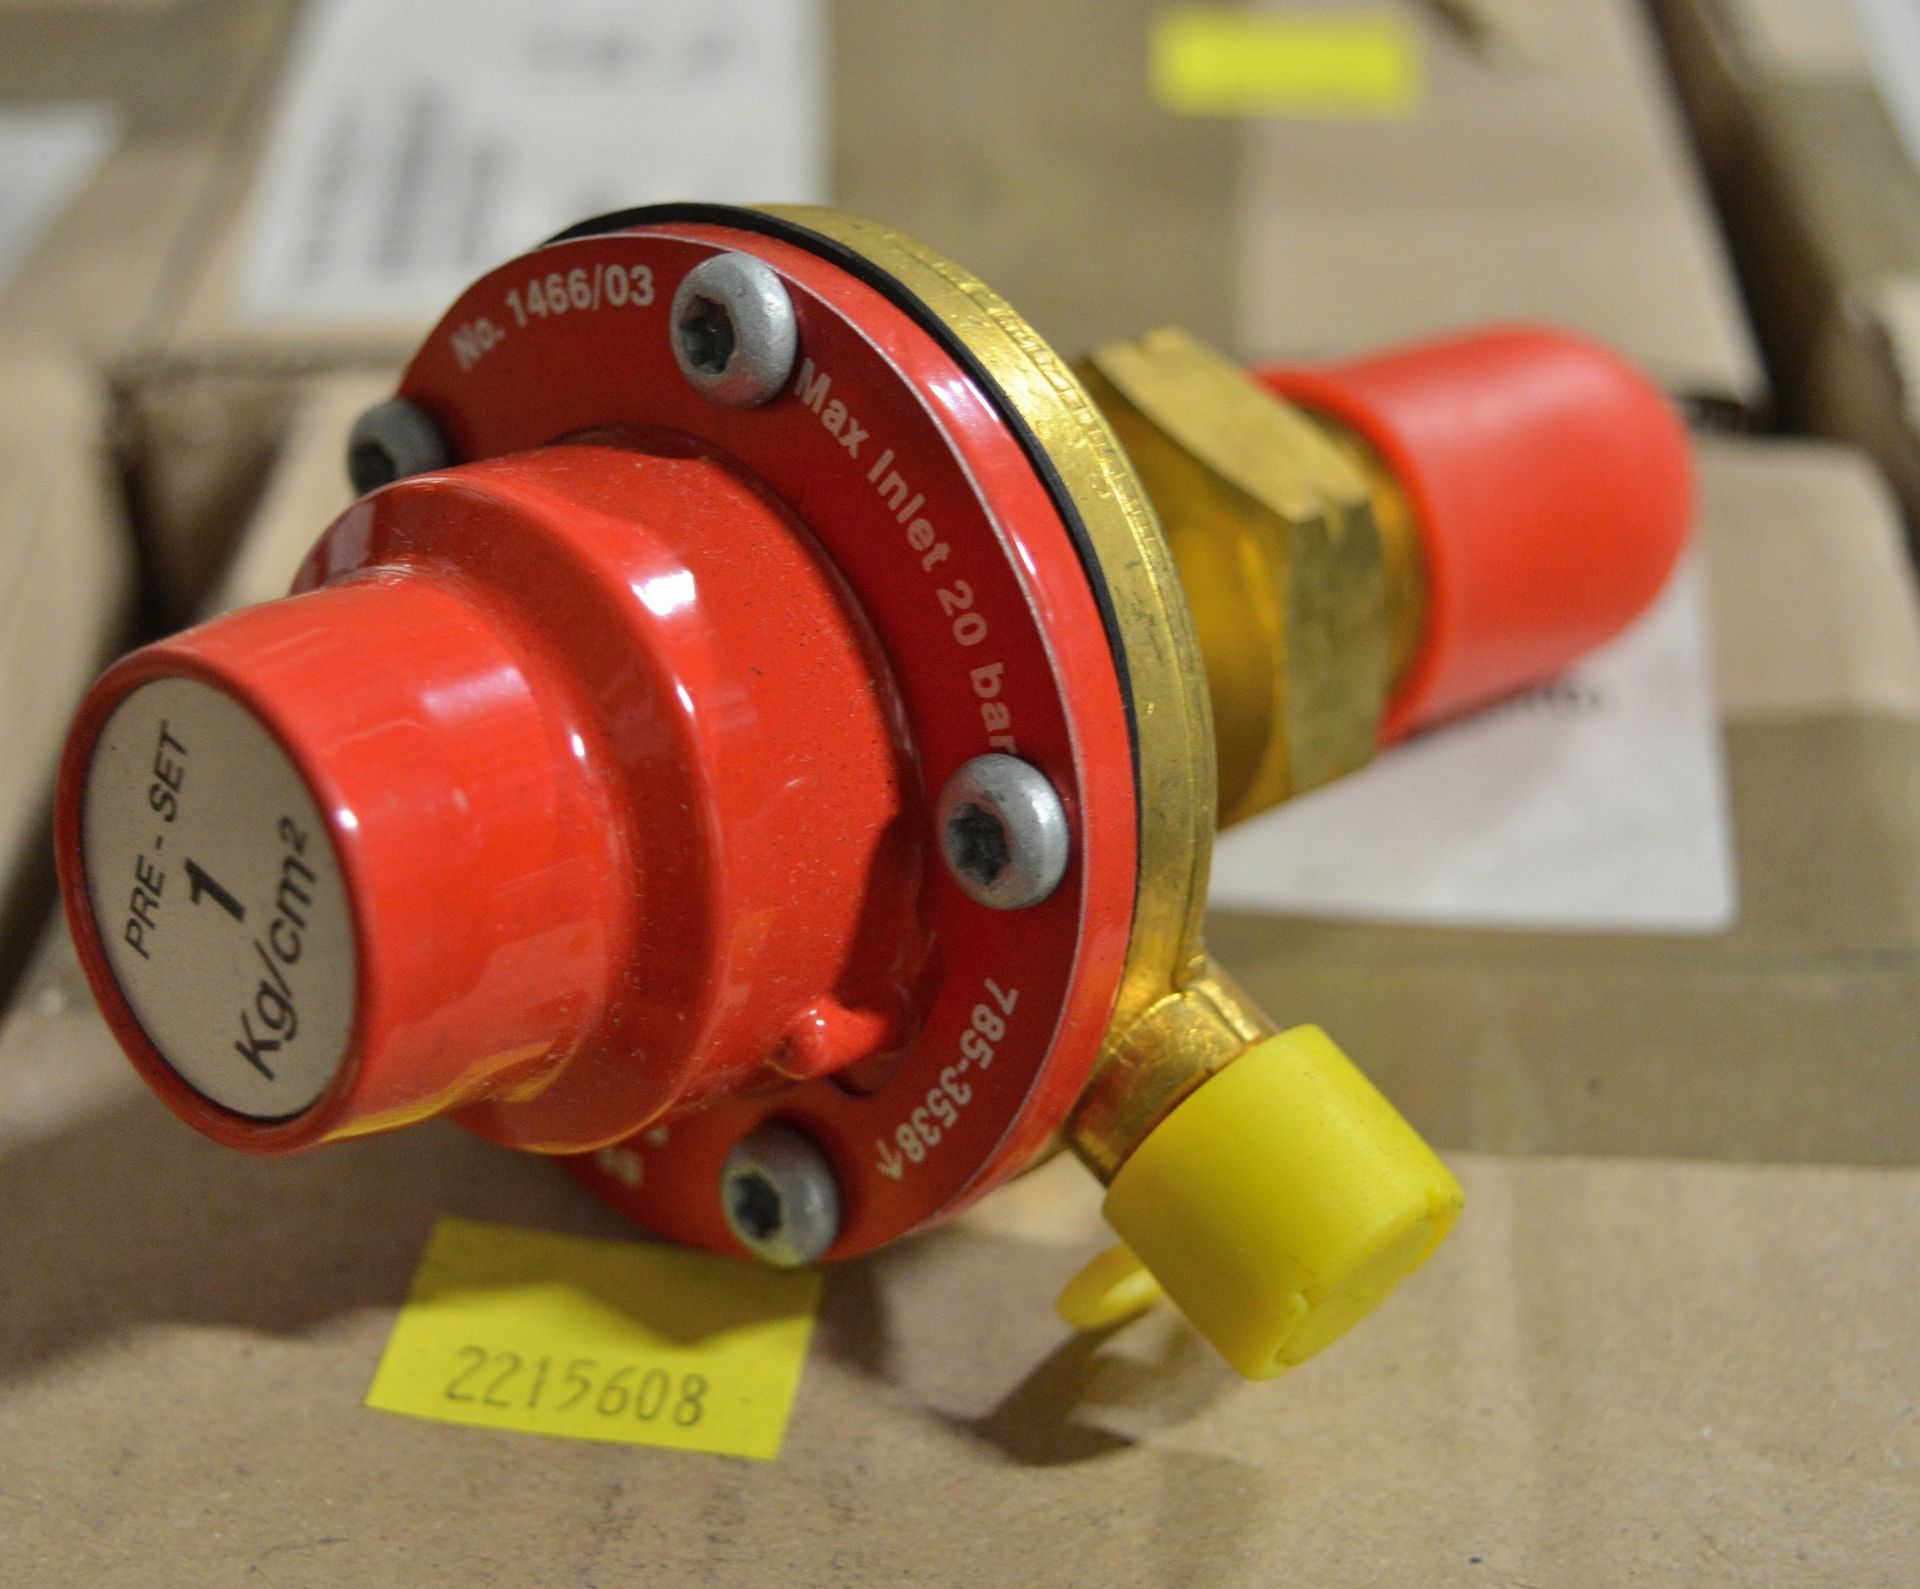 2x Dorman Beacon Lamps, Mechanical Components & Connectors, Pressure gauges, Hydraulic Hos - Image 8 of 8